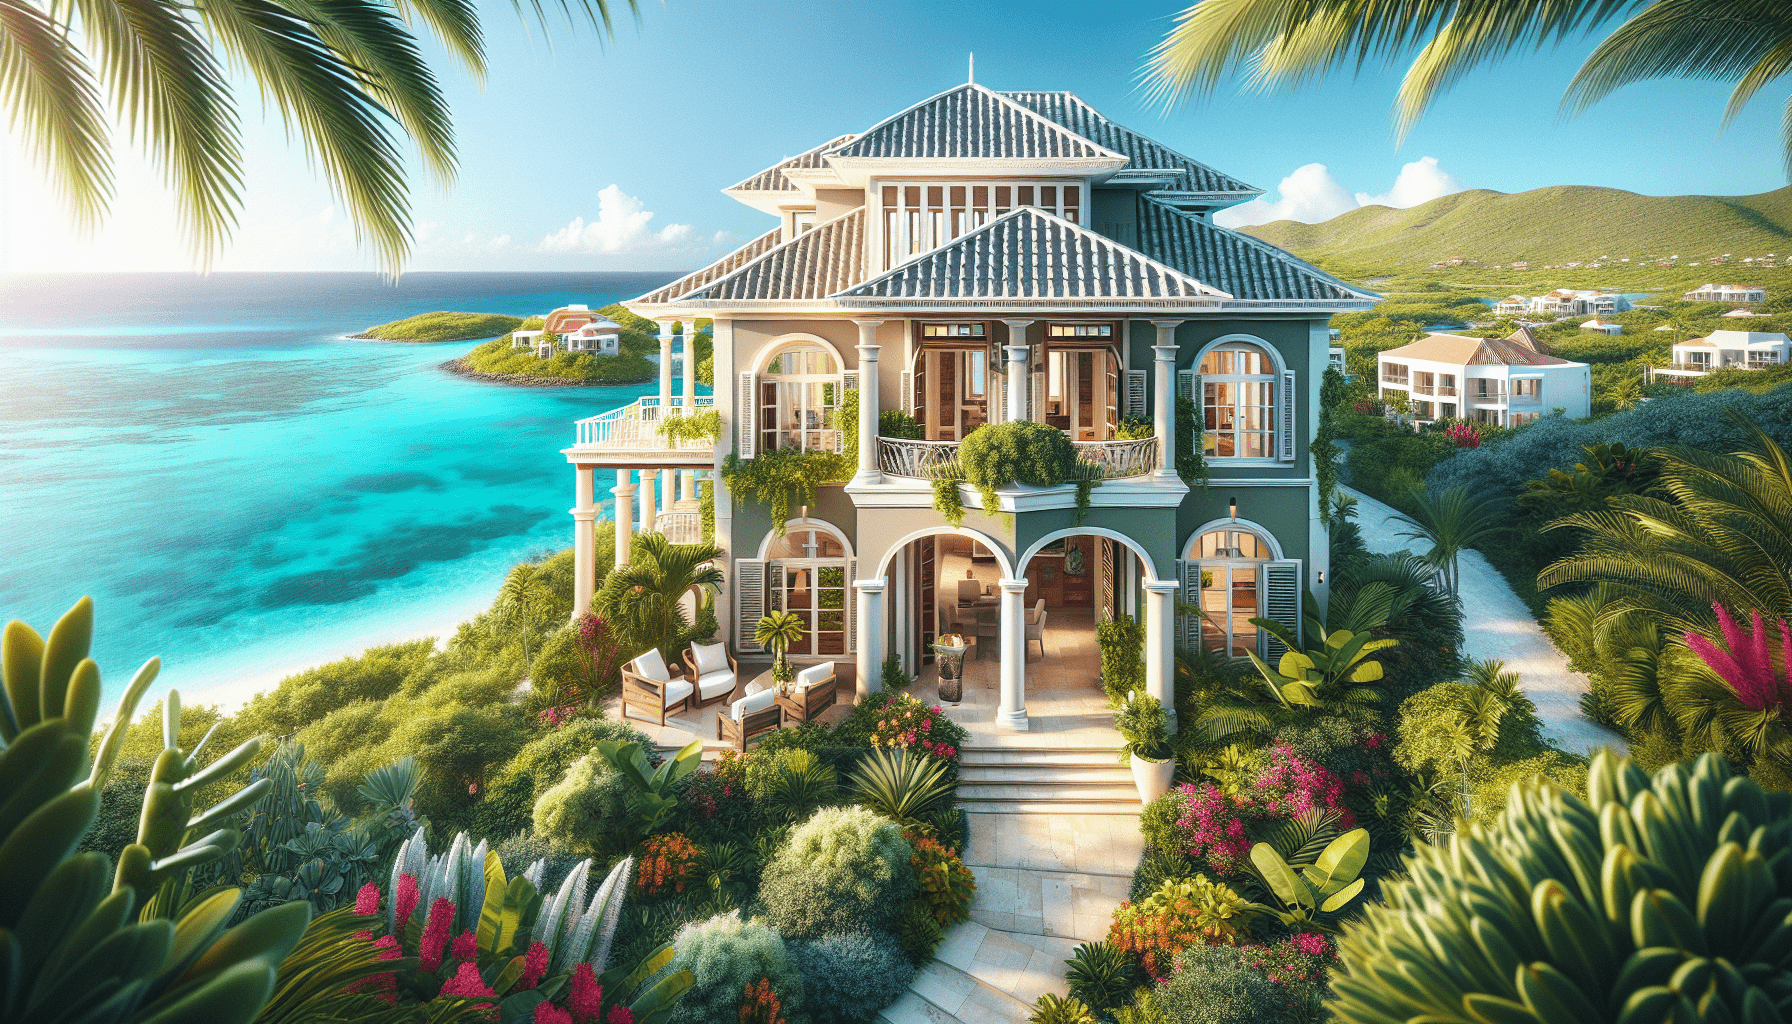 Luxury Caribbean Villas in Bonaire: Your Dream Home Awaits